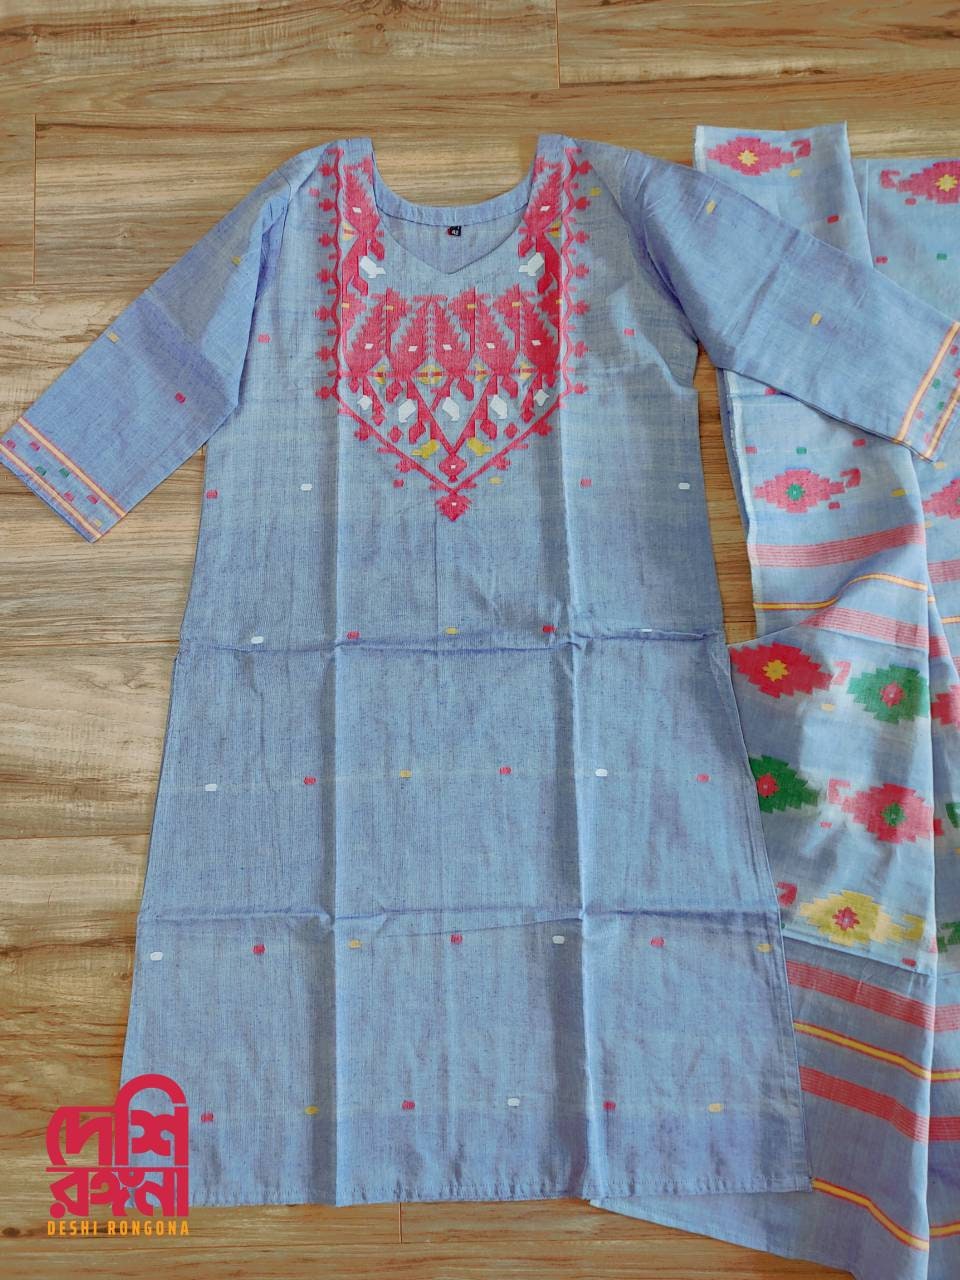 Dhakai Jamdani Dress, I'llHandloom Cotton 2 piece, Grayish blue and Red Combination, Soft, Comfortable Summer Wear. Kamij and Dupatta